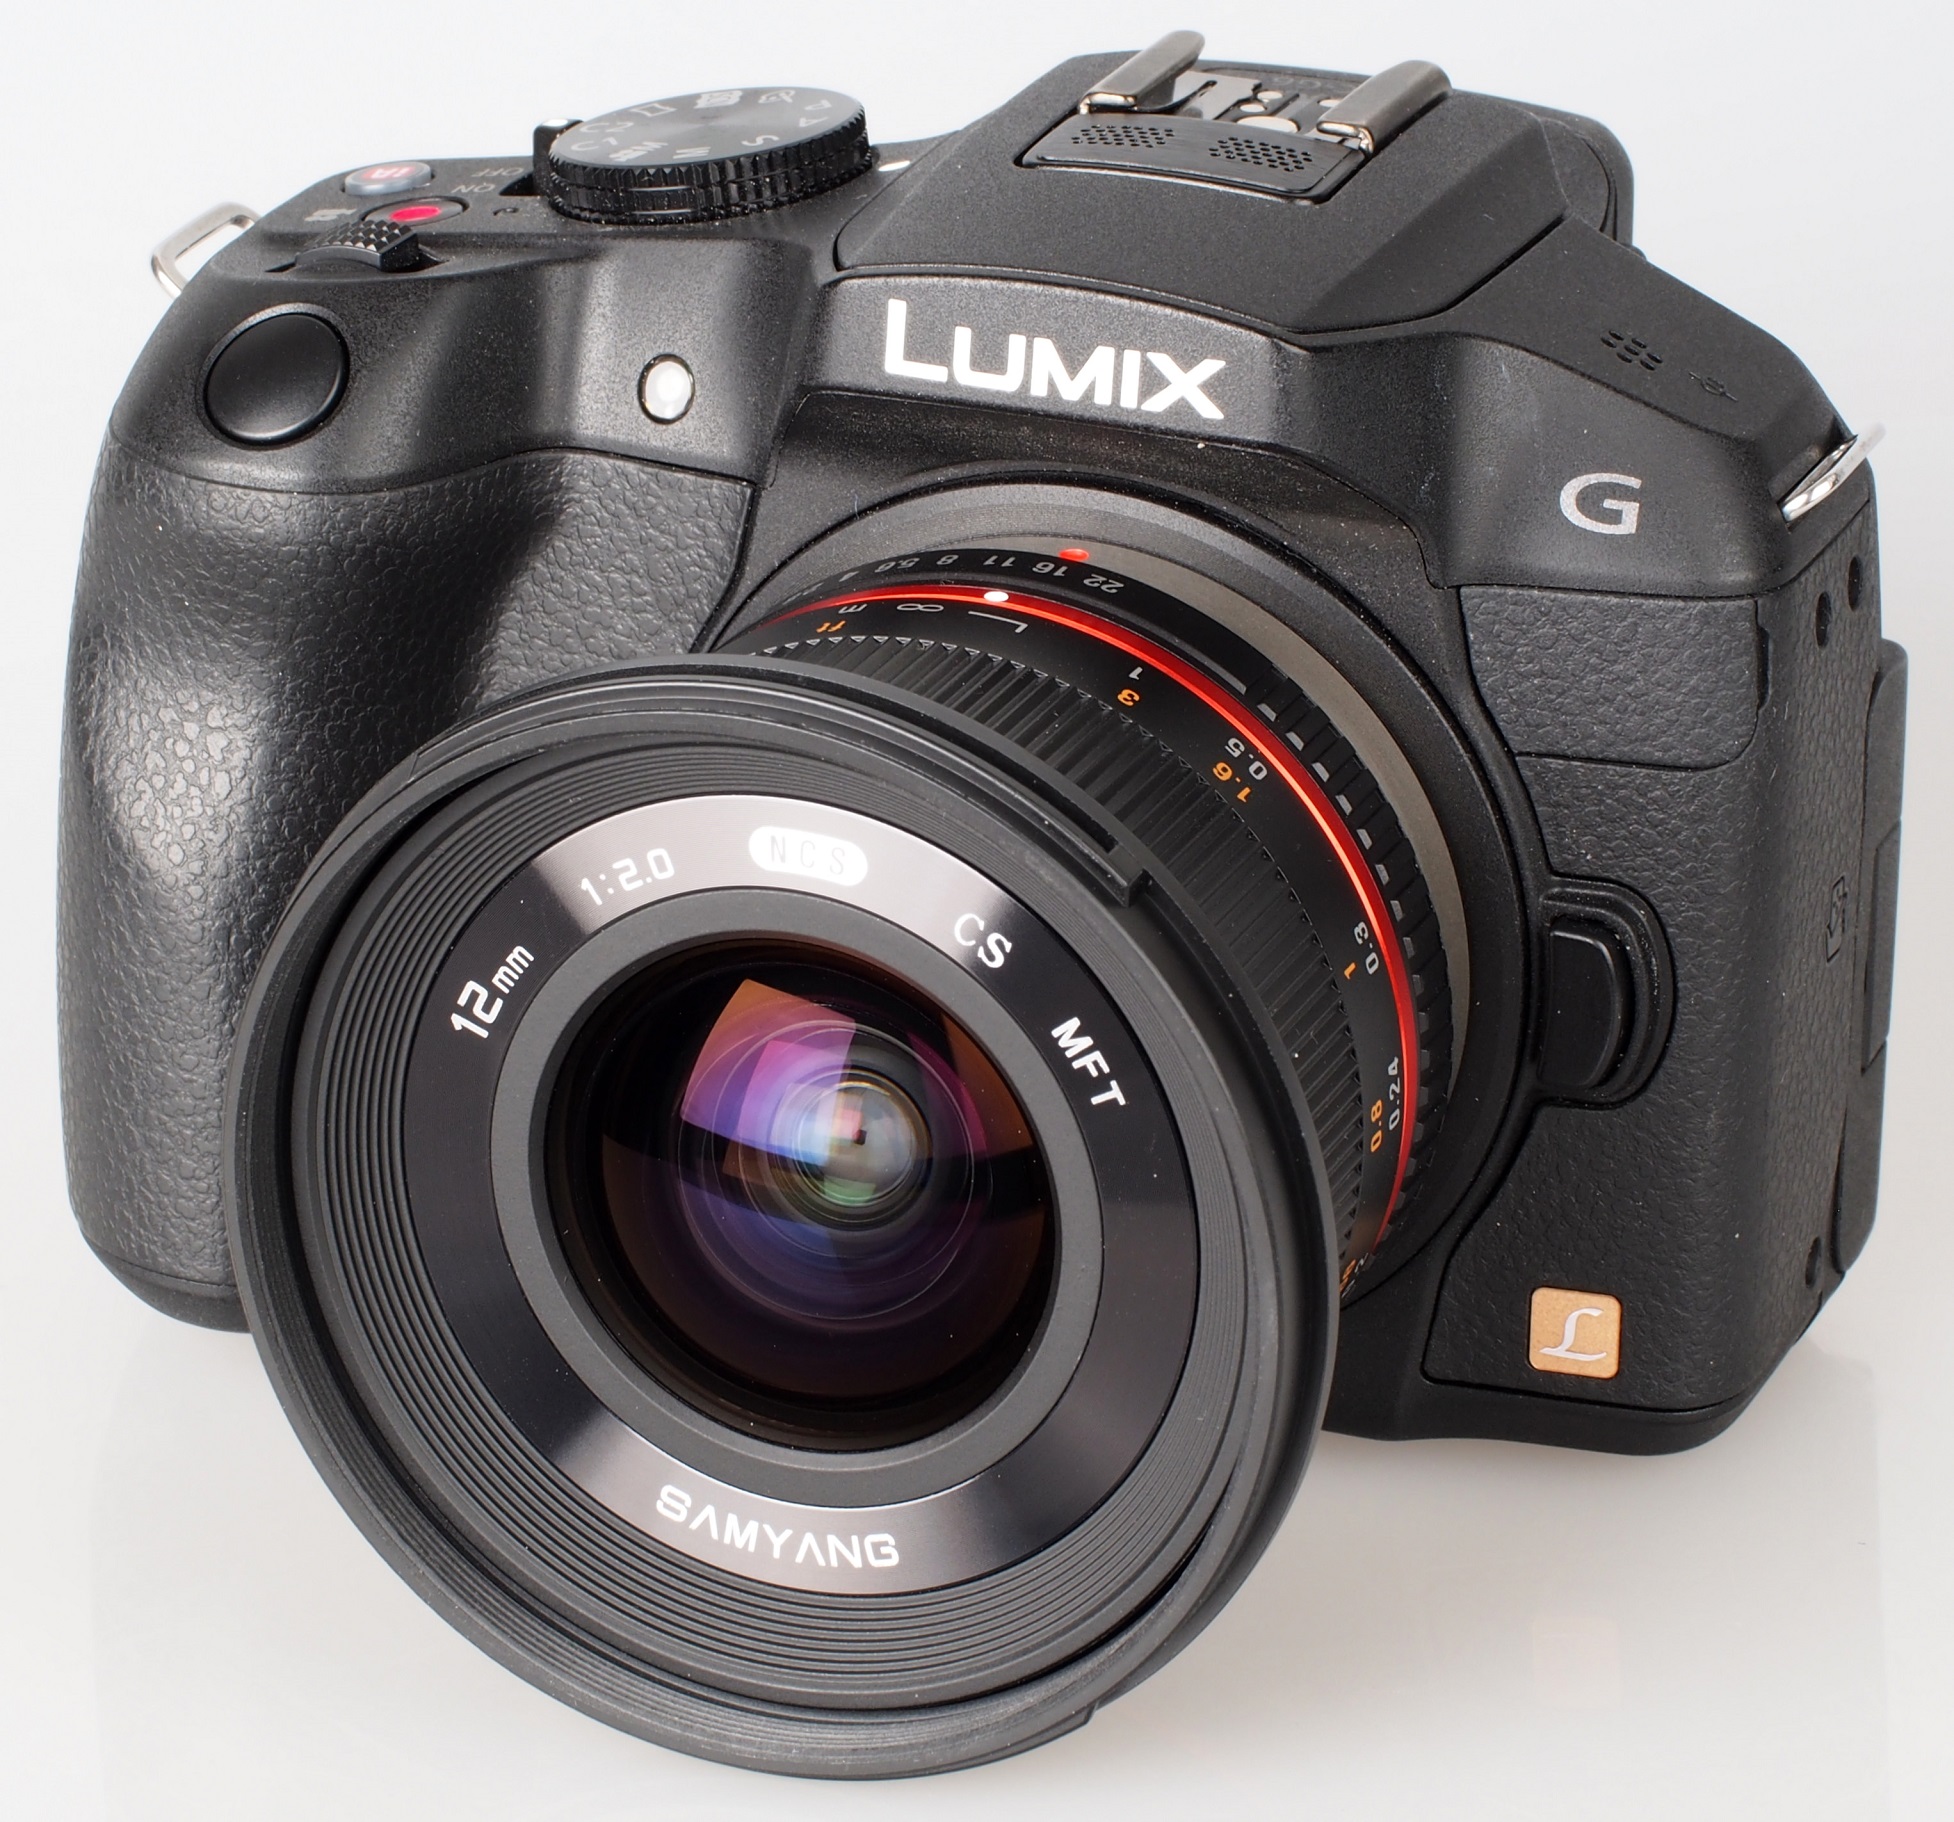 Samyang 12mm f/2.0 NCS CS MFT Lens Review